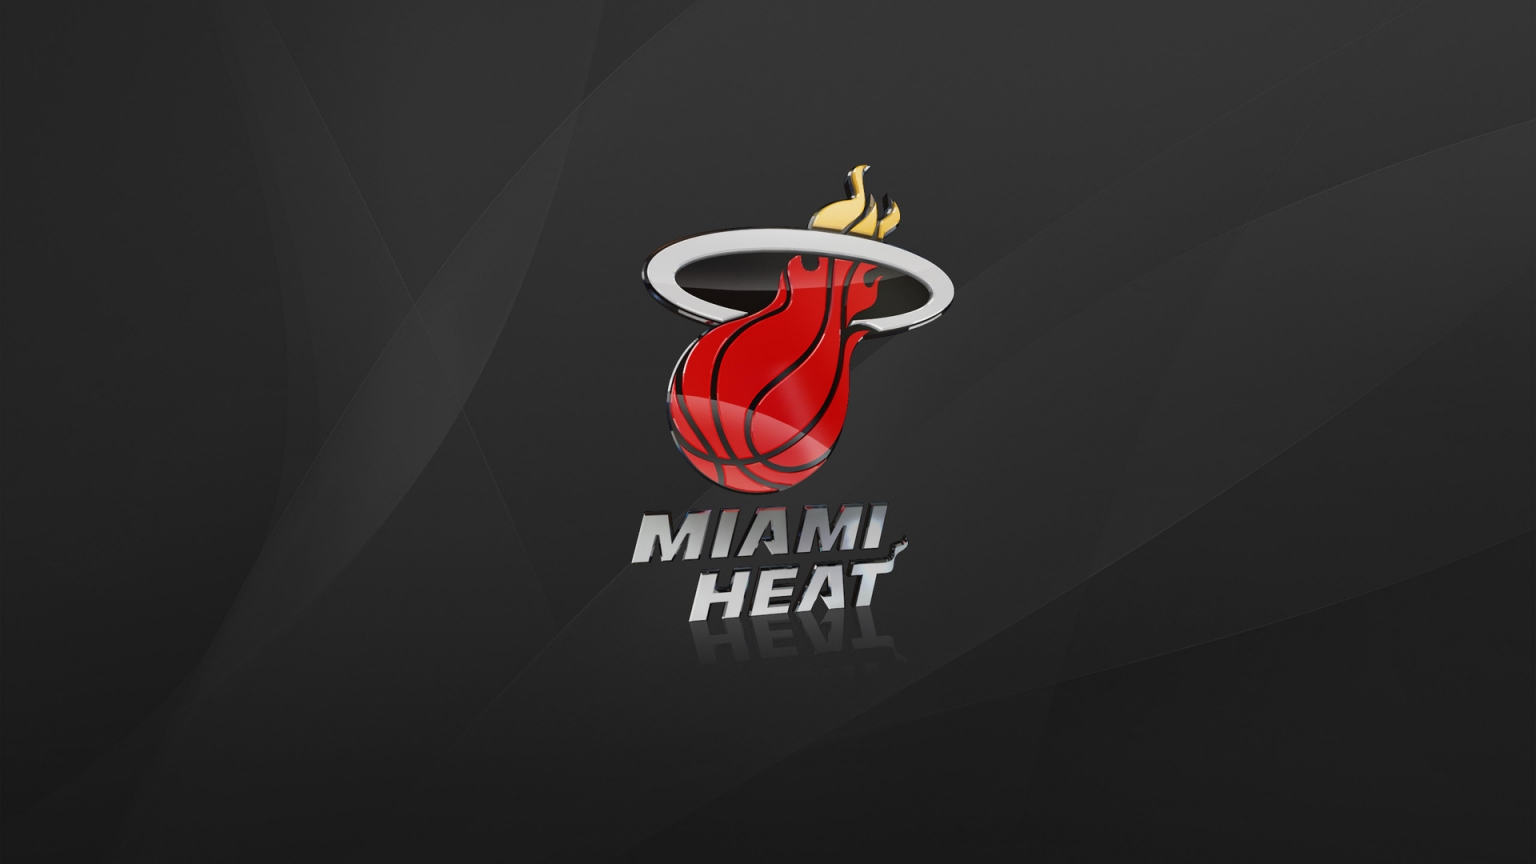 Miami Heat for 1536 x 864 HDTV resolution